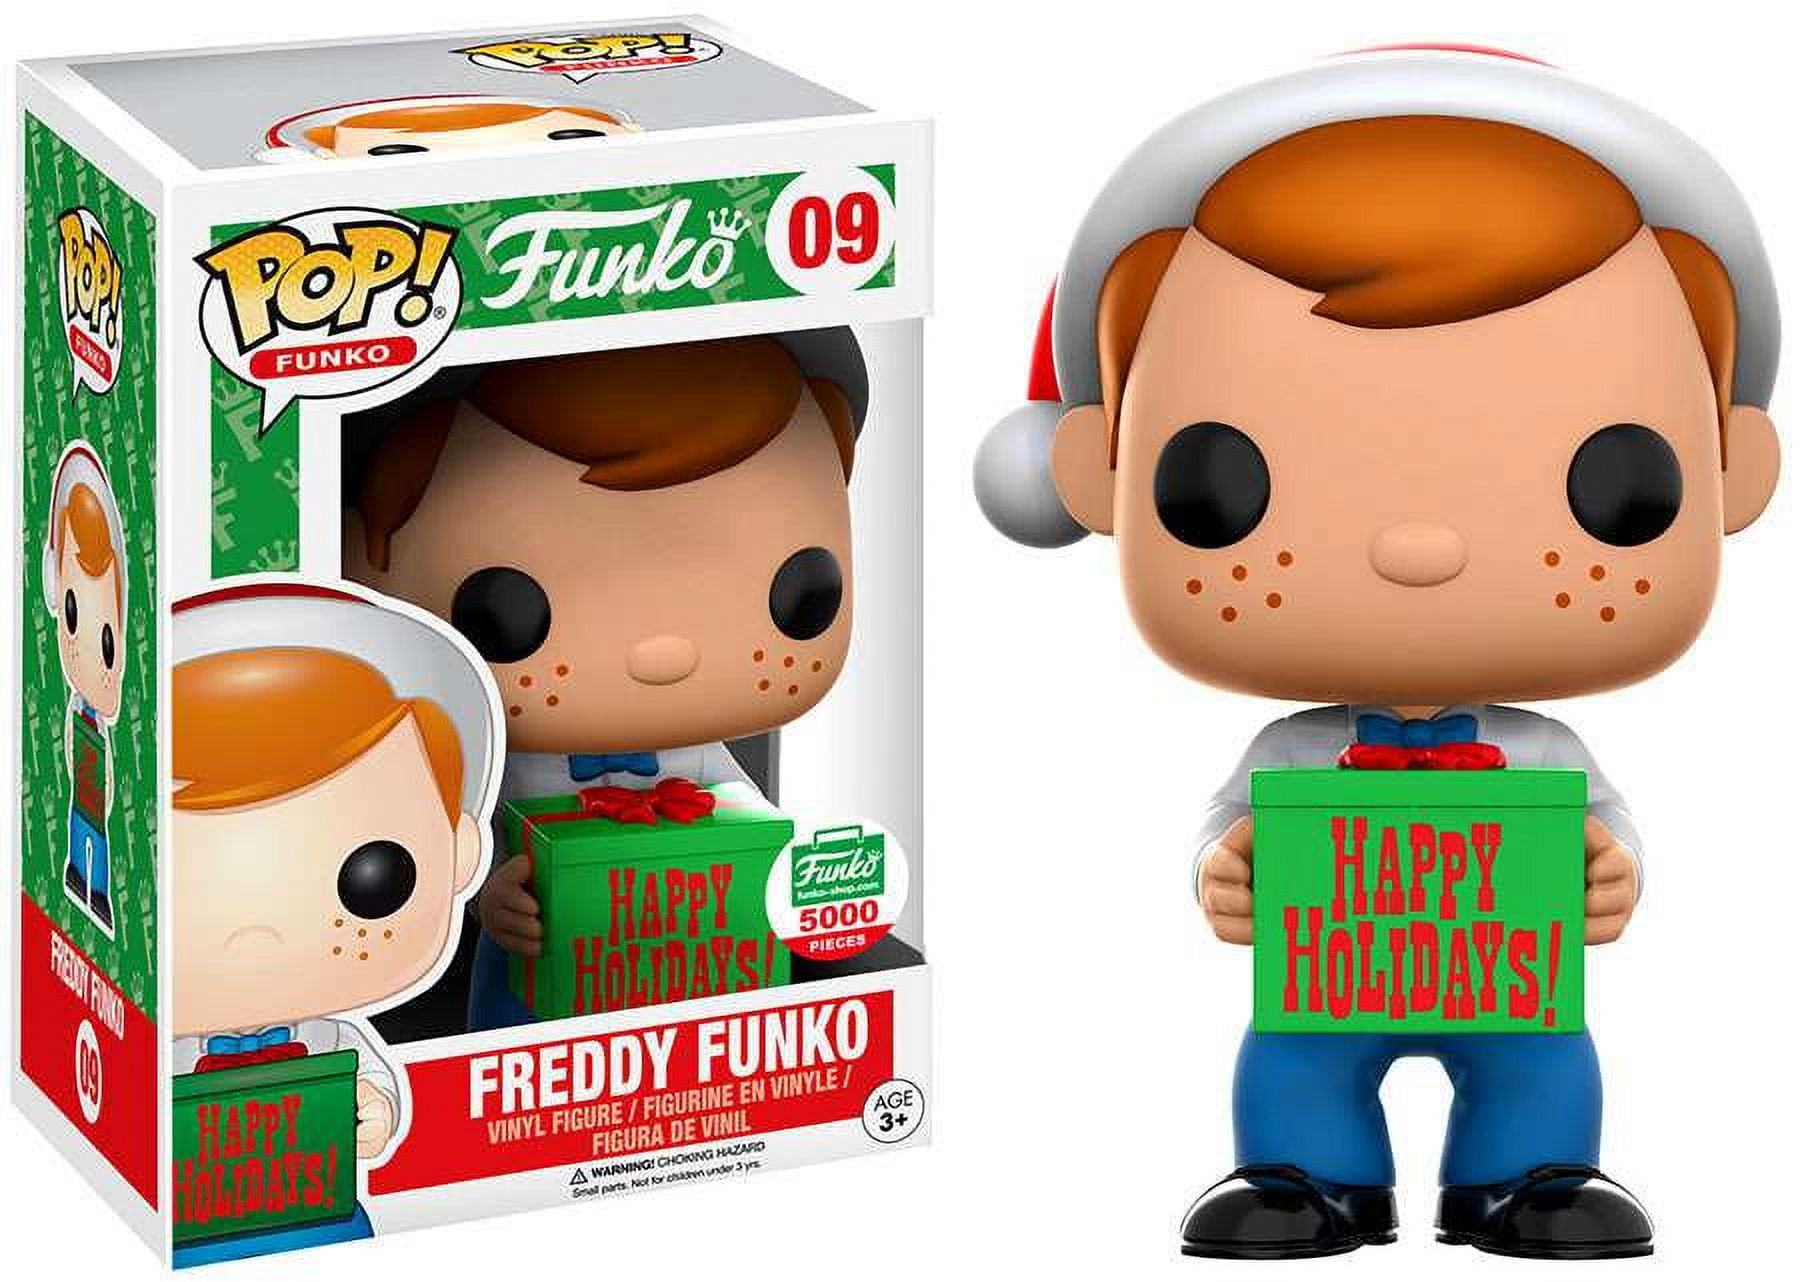 POP! Funko Santa Freddy Funko Vinyl Figure 